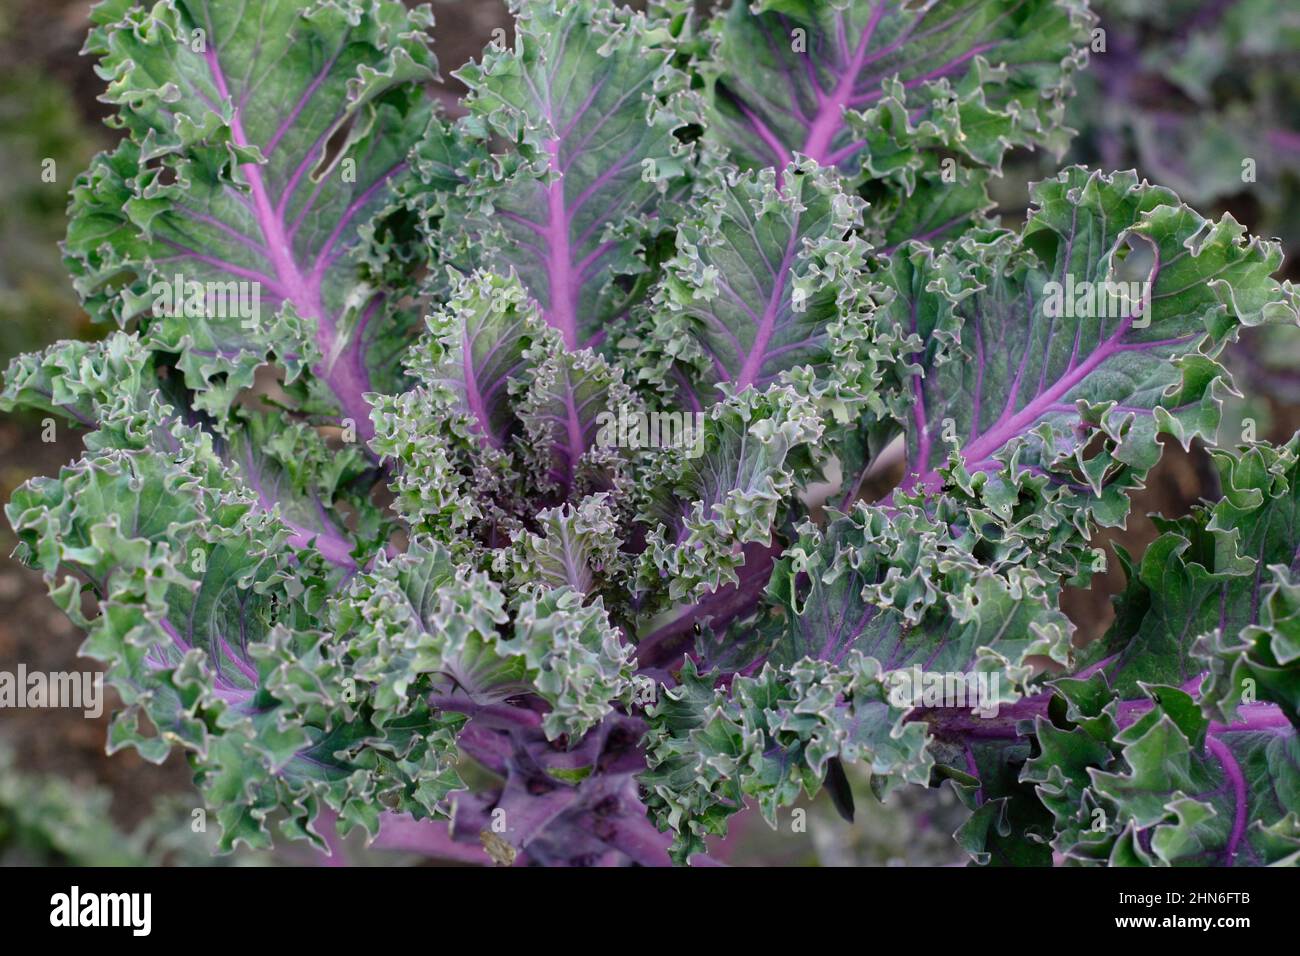 Brassica oleracea' 'Midnight Sun' kale ornamental kale leaves with purple veins. UK. Stock Photo